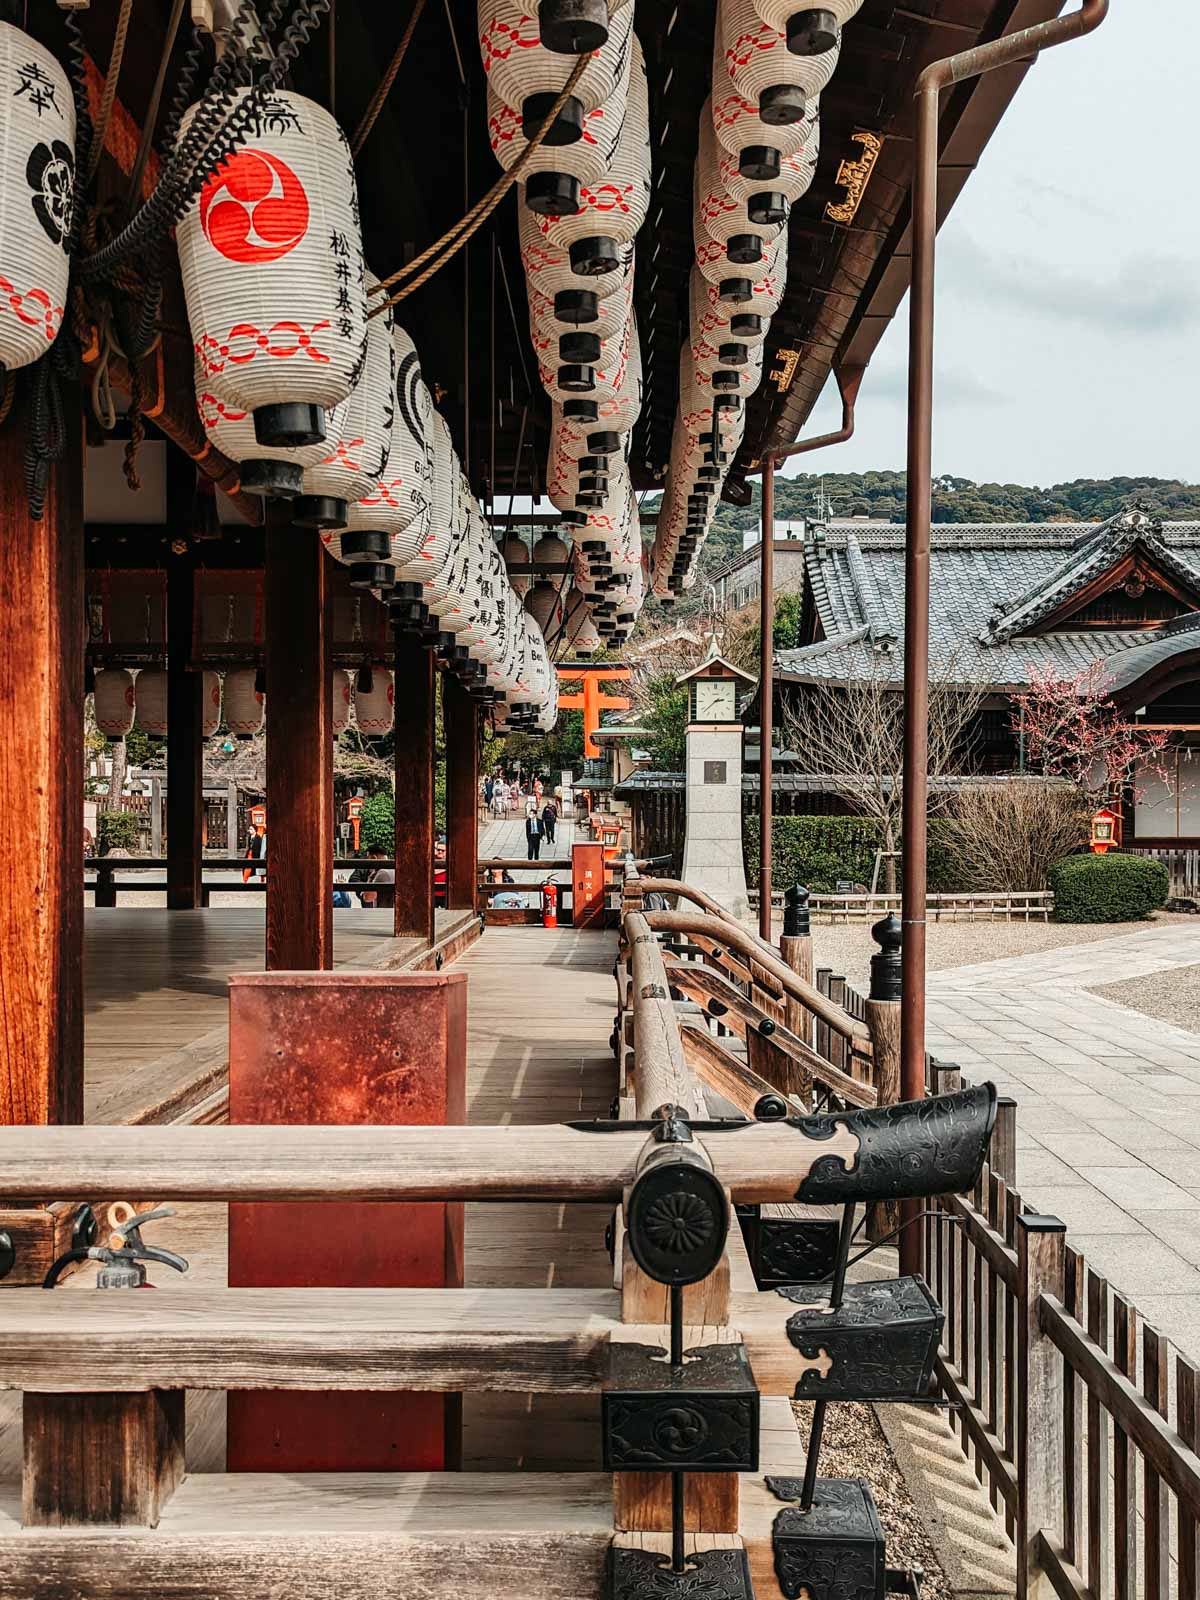 Inside Kyoto Yasaka Shrine with view of wooden platform with Japanese lanterns hanging above.